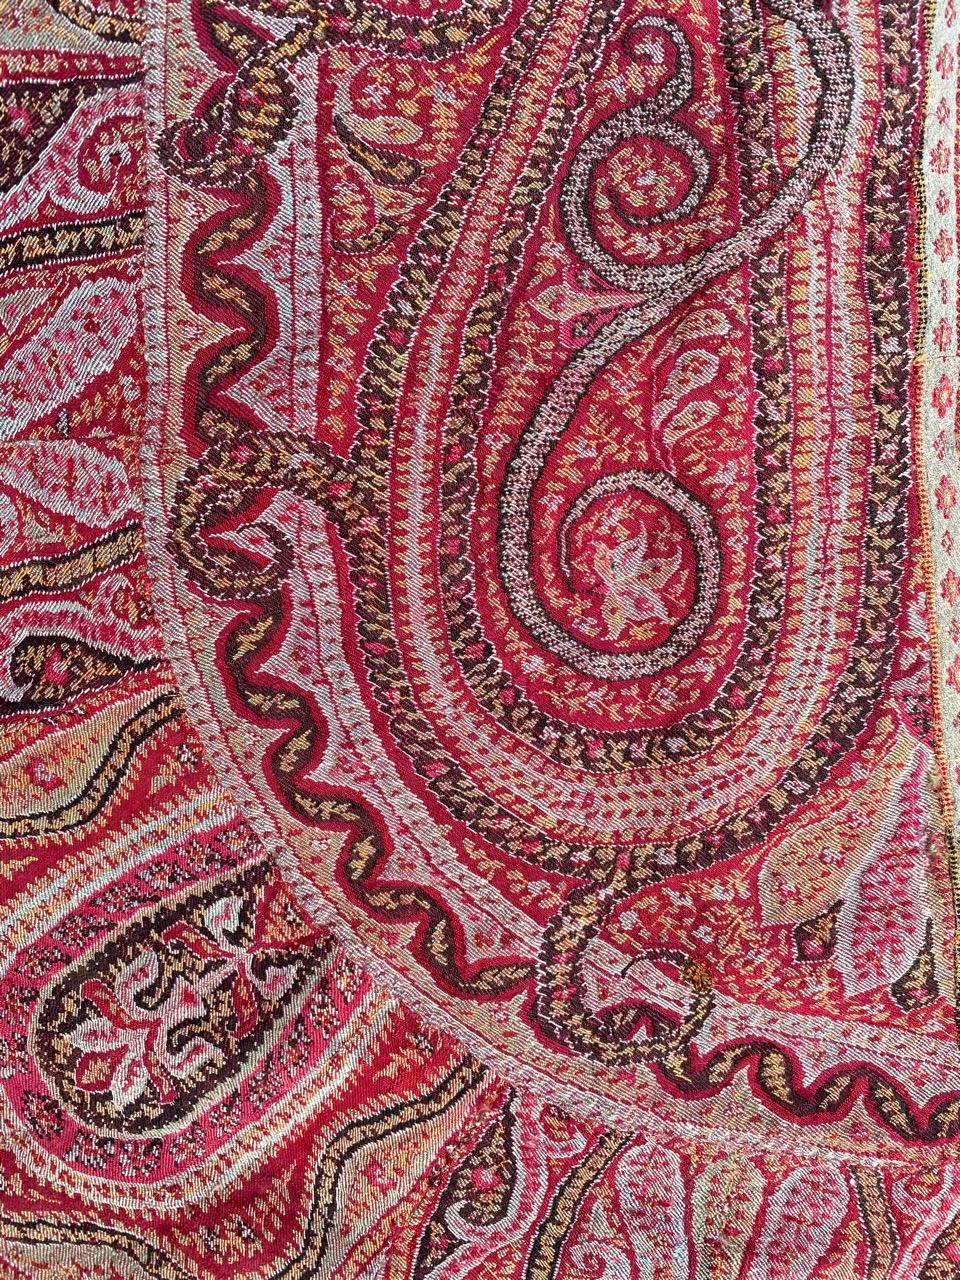 Embroidered Pretty Antique Kashmir Shawl Fragment